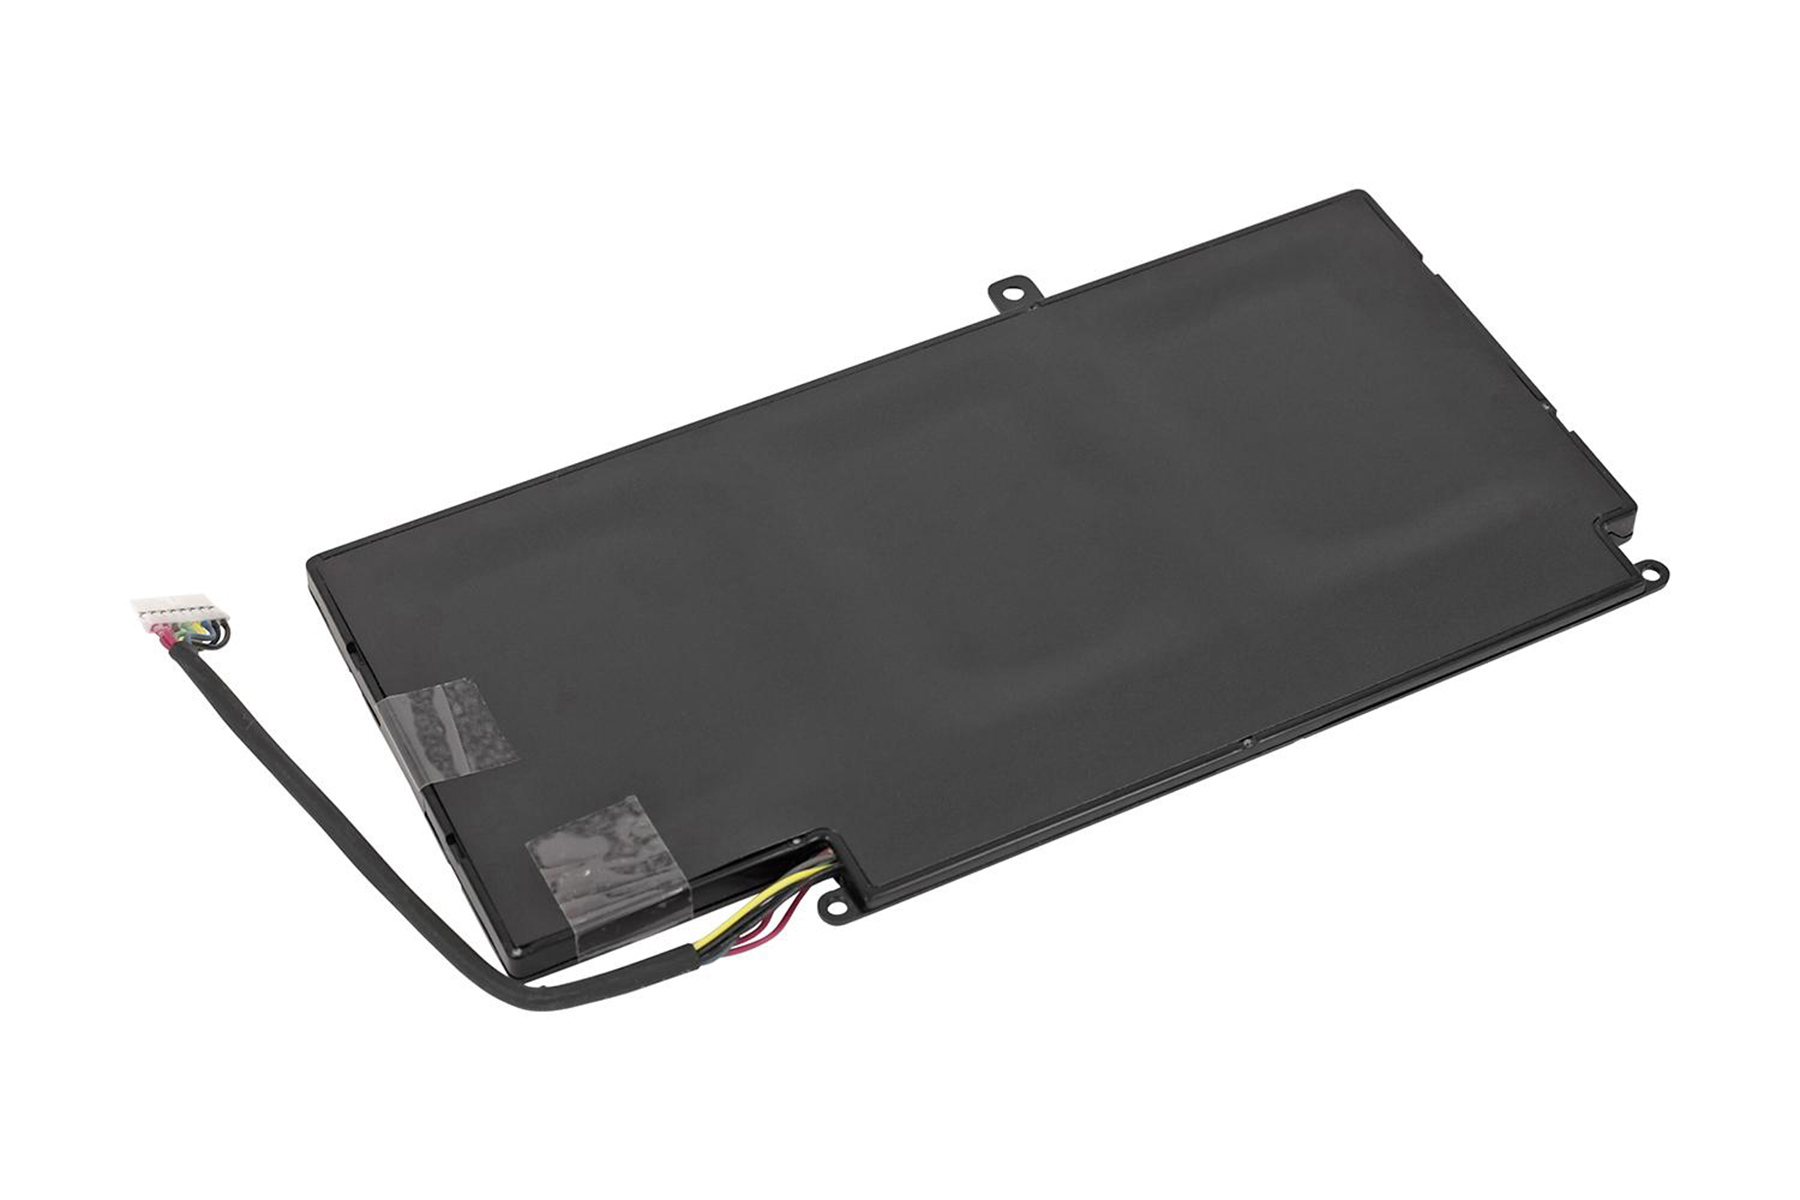 POWERSMART für Laptop Li-ion mAh TWRRK Volt, Dell VH748 Akku, 4600 11.10